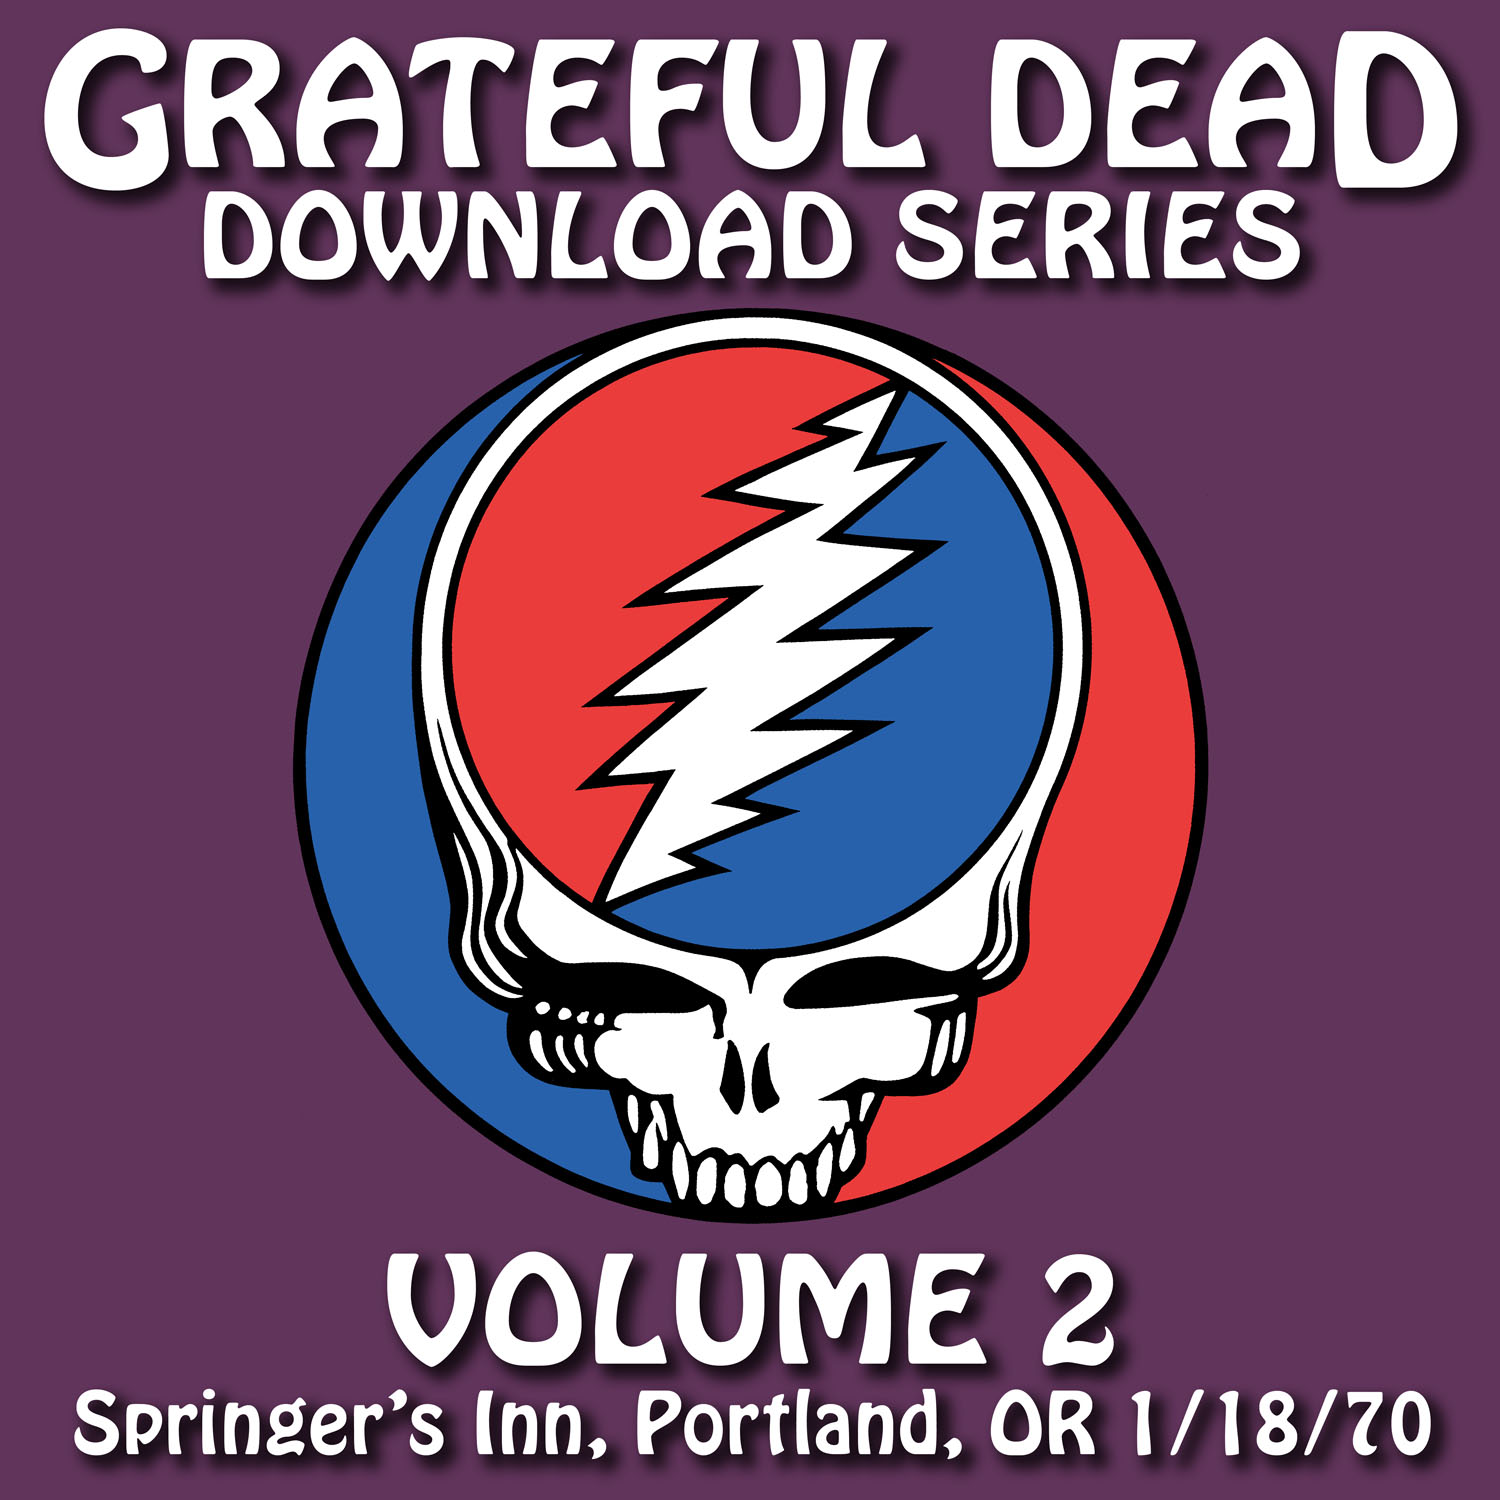 Grateful Dead Download Series 2 album cover artwork